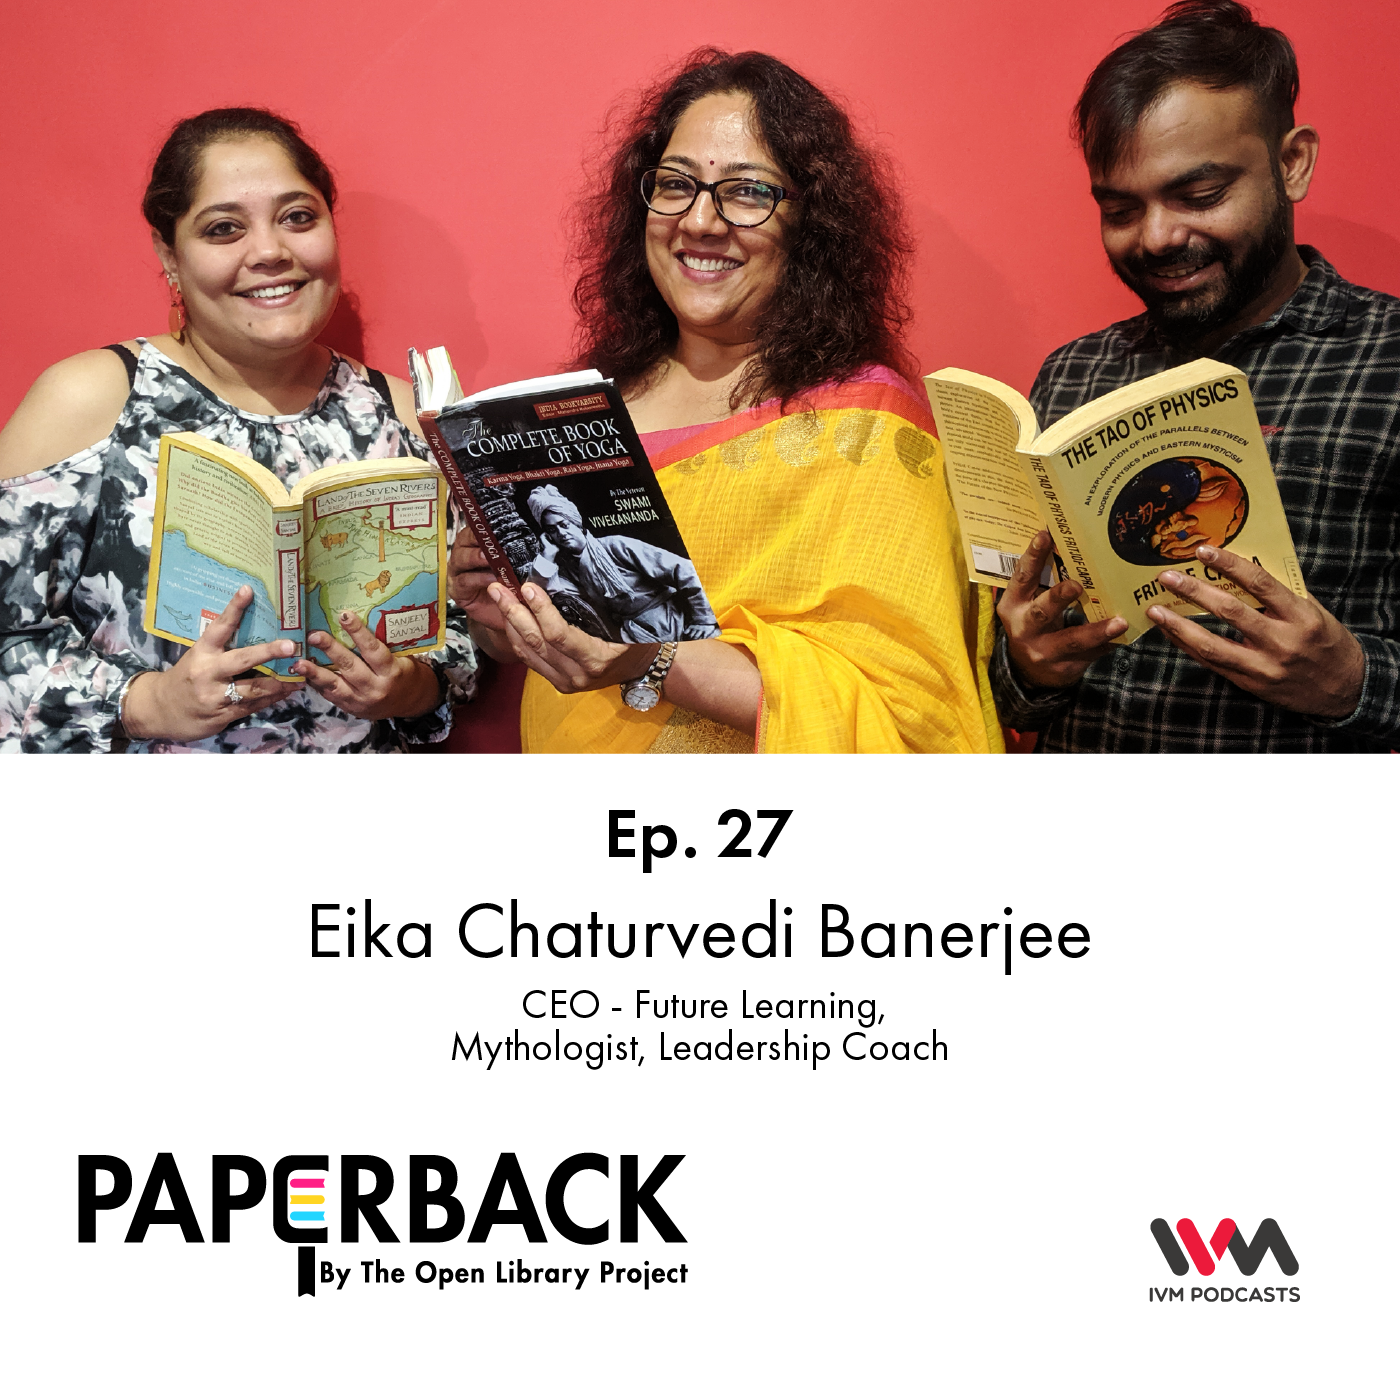 Ep. 27: Eika Chaturvedi Banerjee